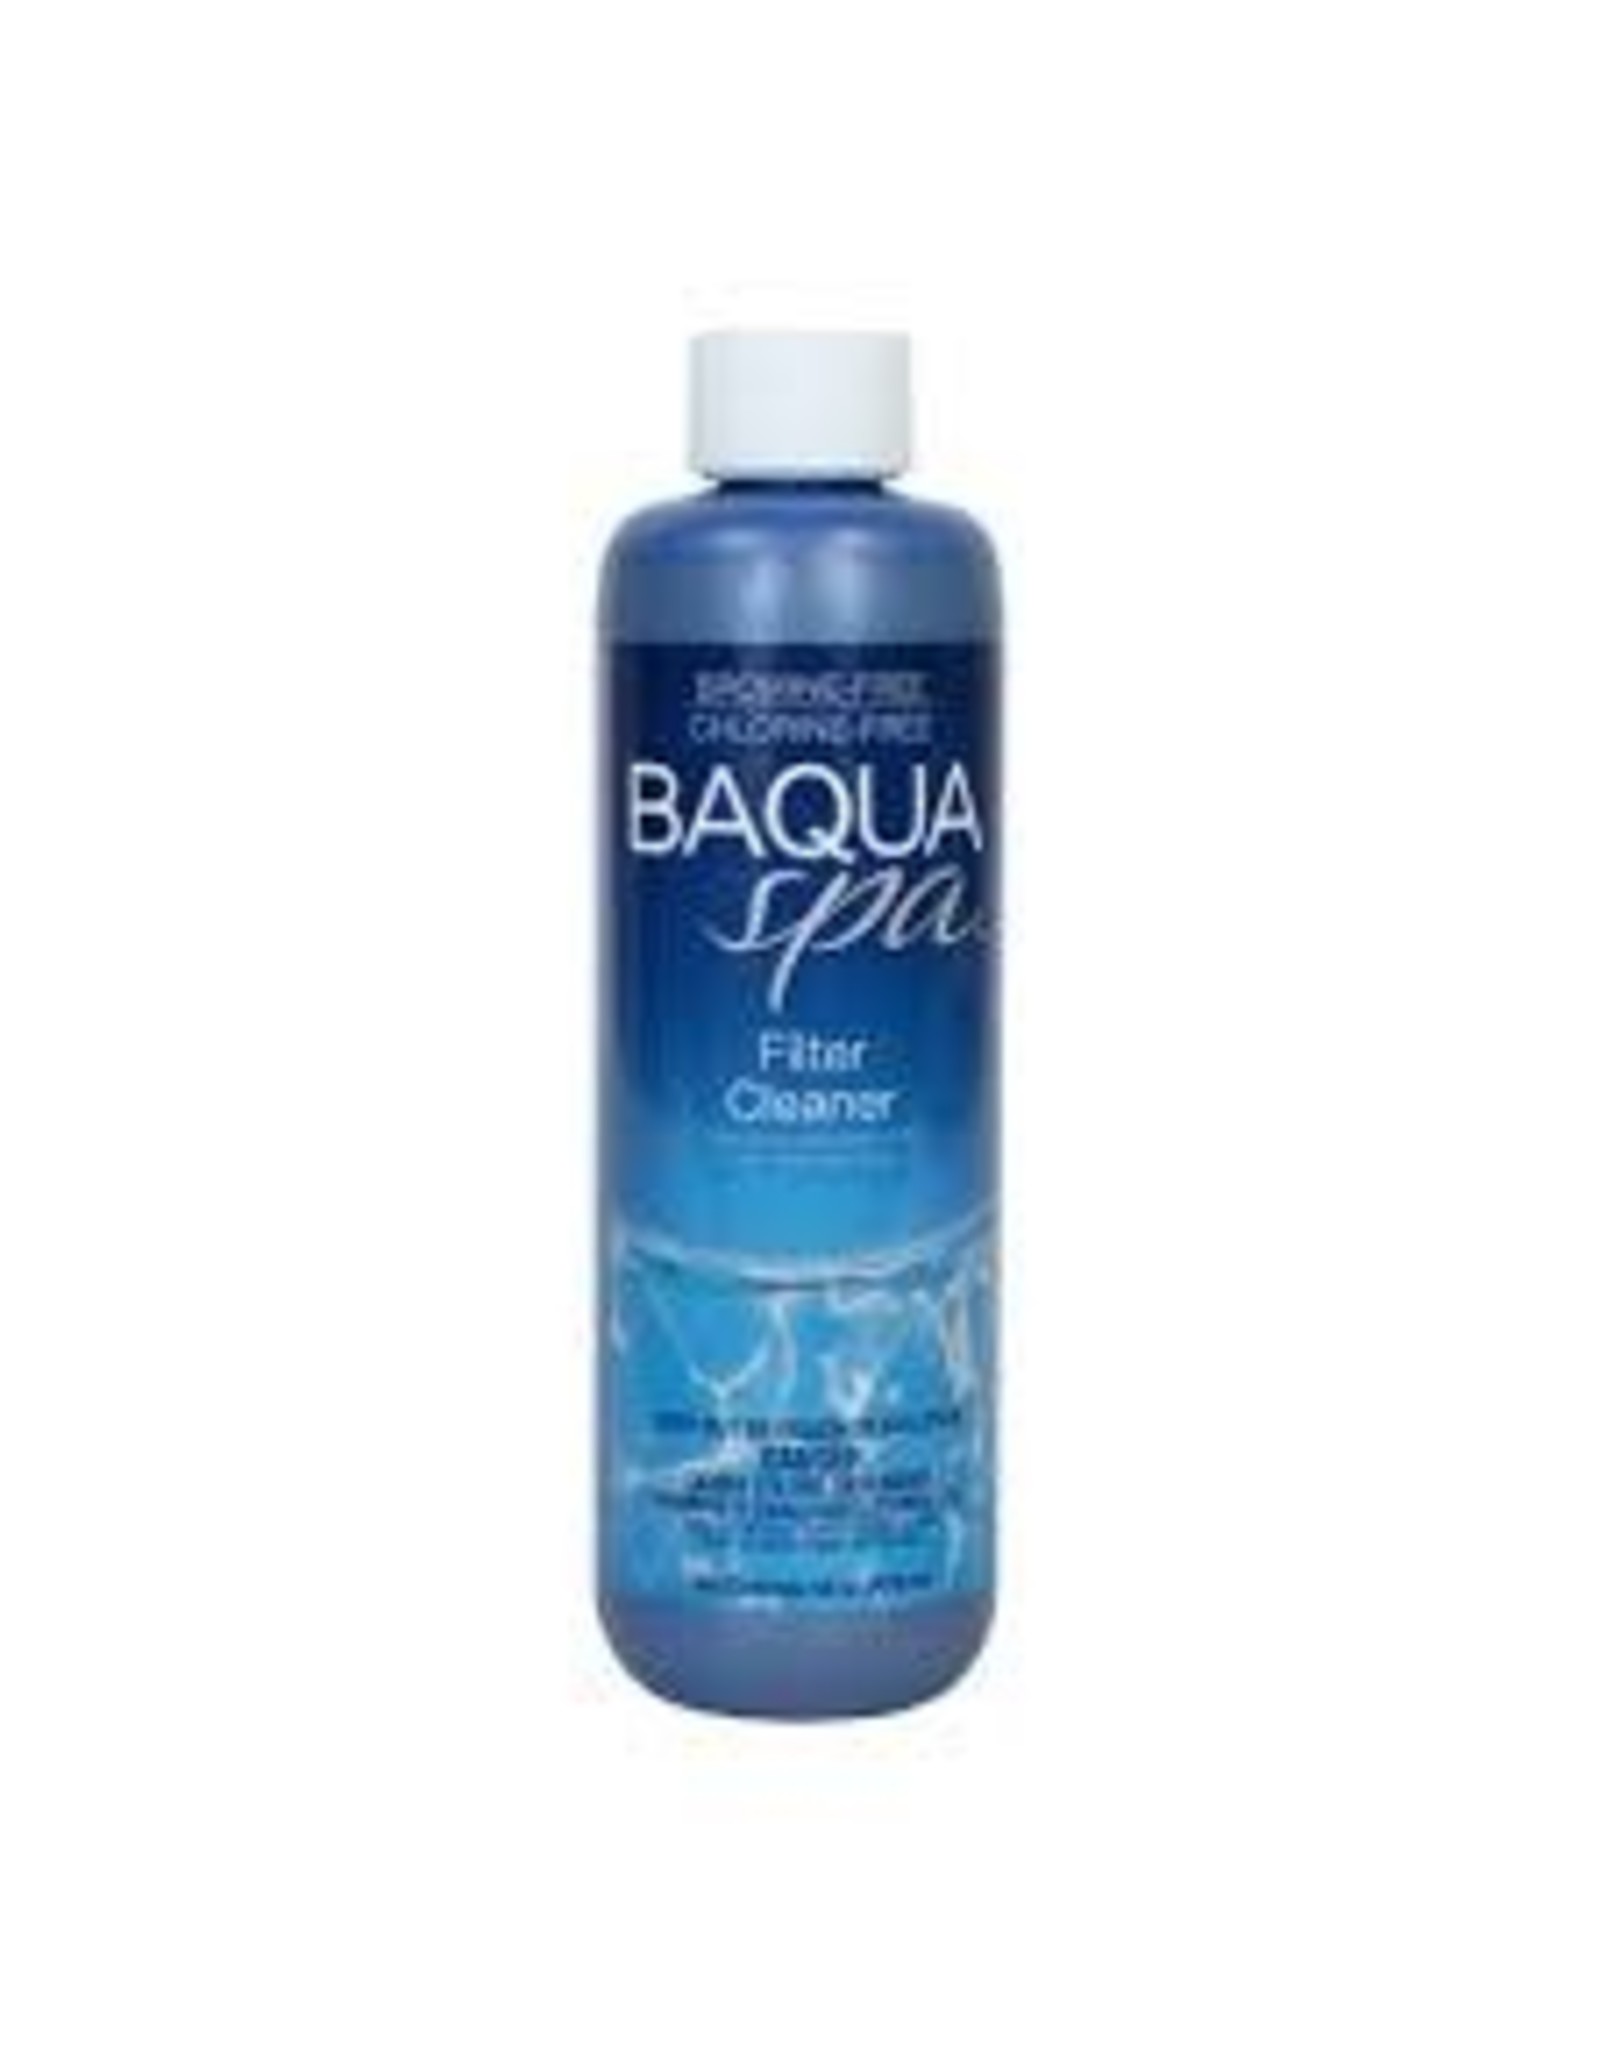 Baqua Baqua spa-Filter Cleaner